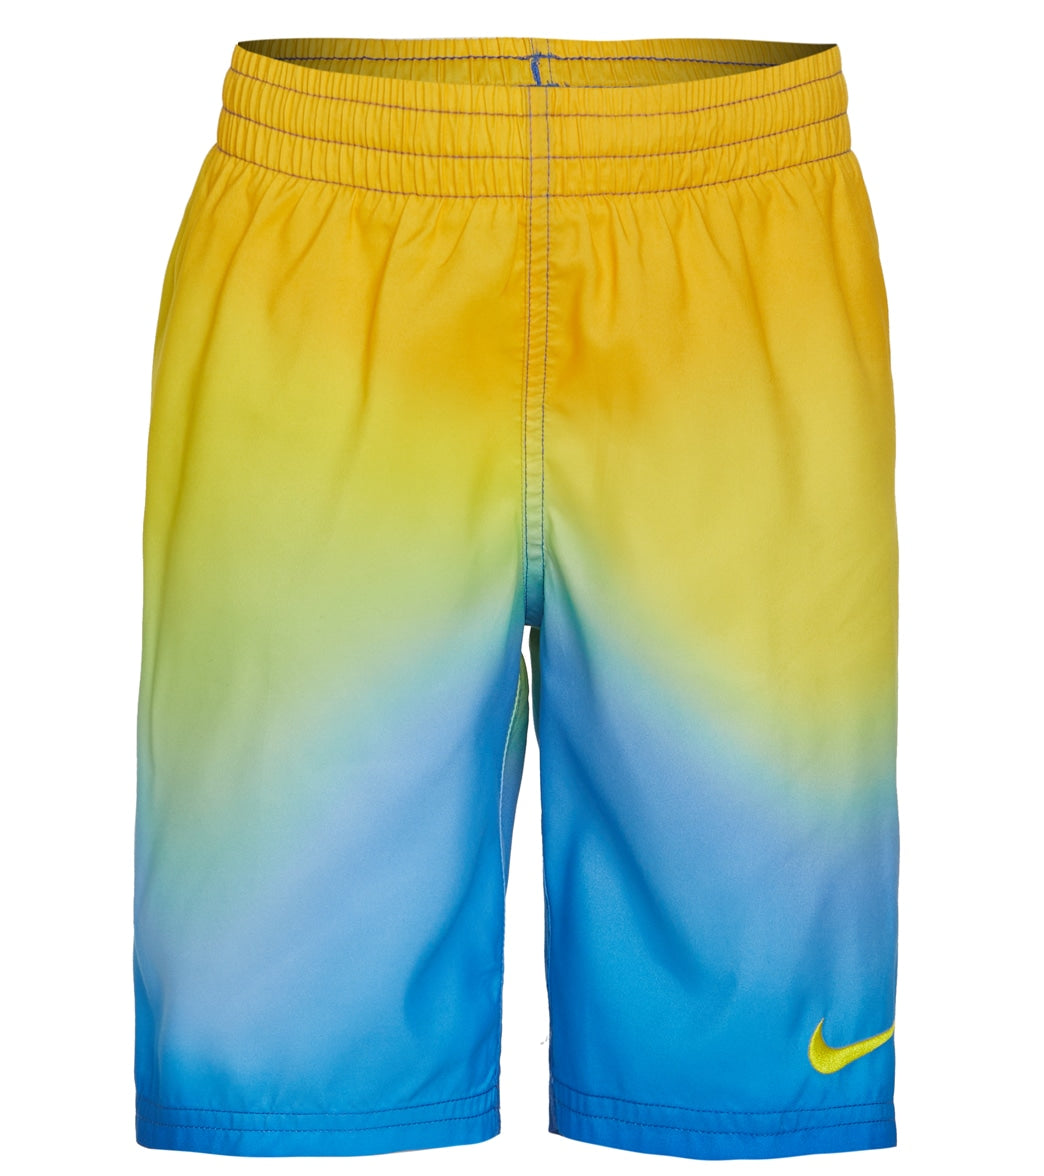 Nike Boys Aurora Borealis Packable Swim Trunks